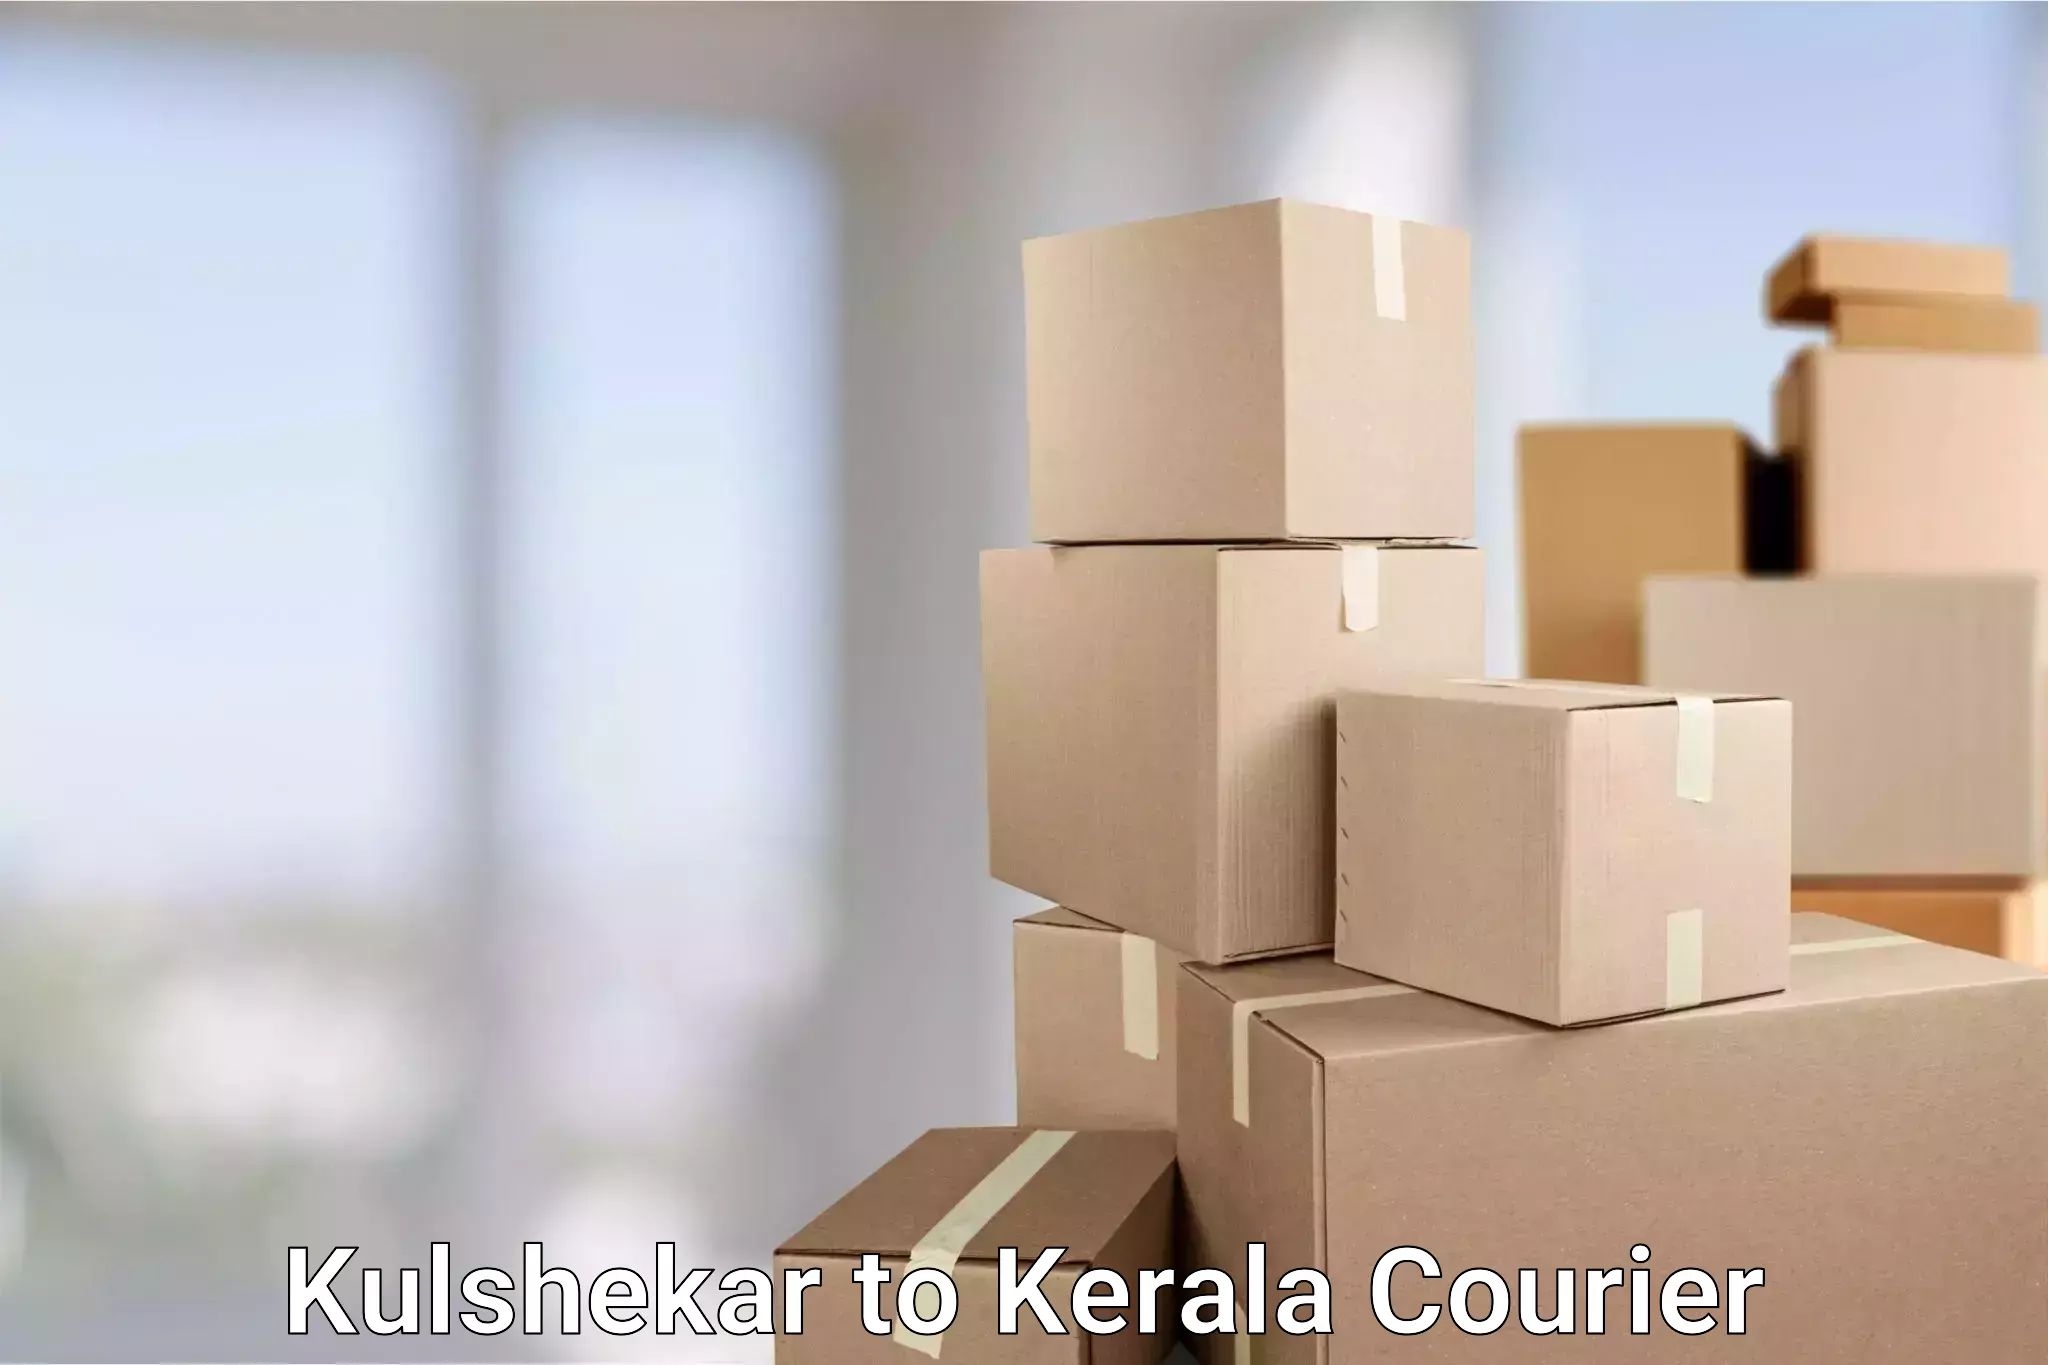 Tracking updates in Kulshekar to Kerala